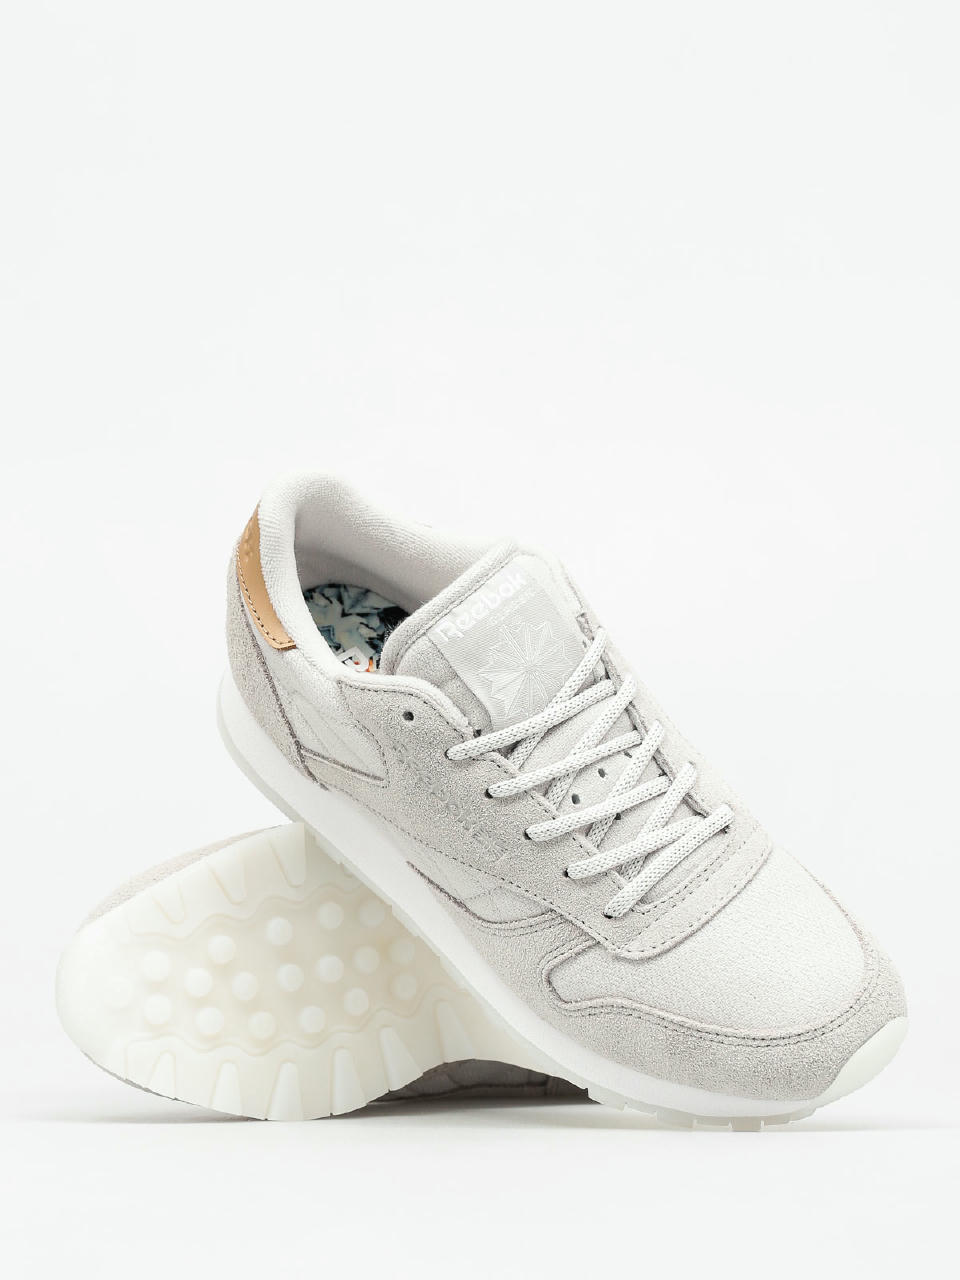 Reebok Shoes Classic Leather Sea Worn (skull grey/white)